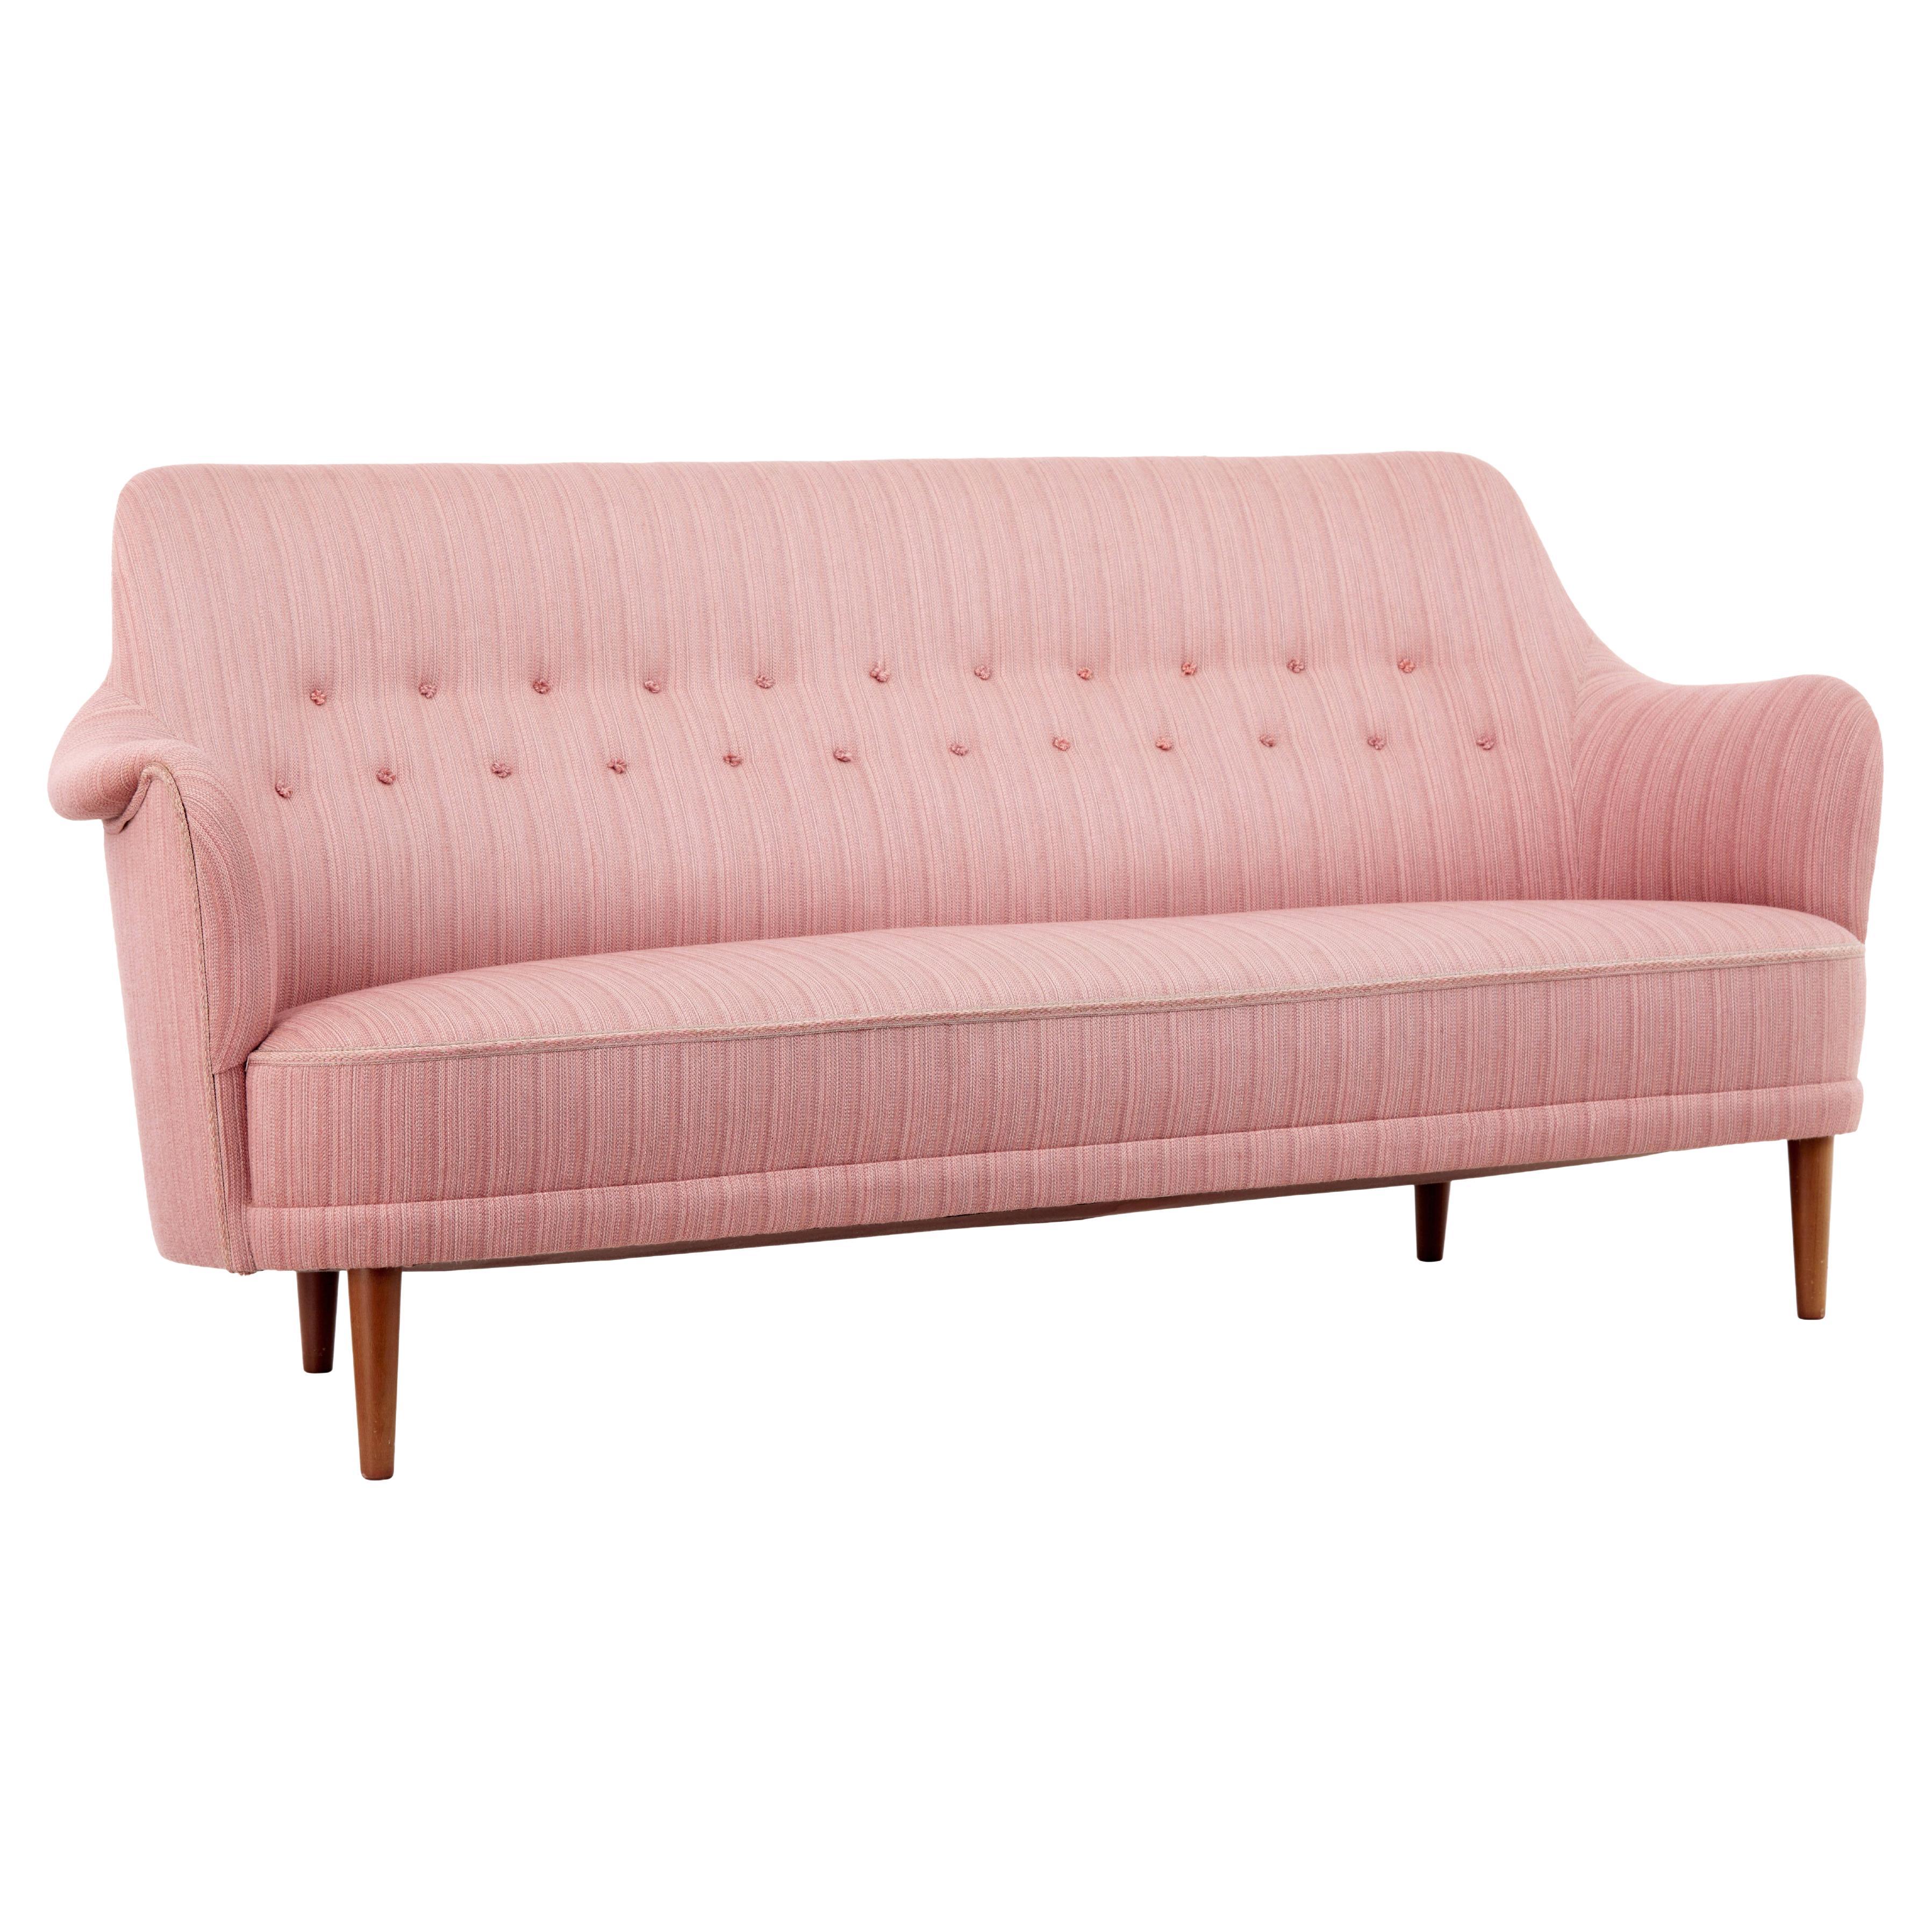 Mid 20th century samsa rund triple sofa by Carl Malmsten For Sale